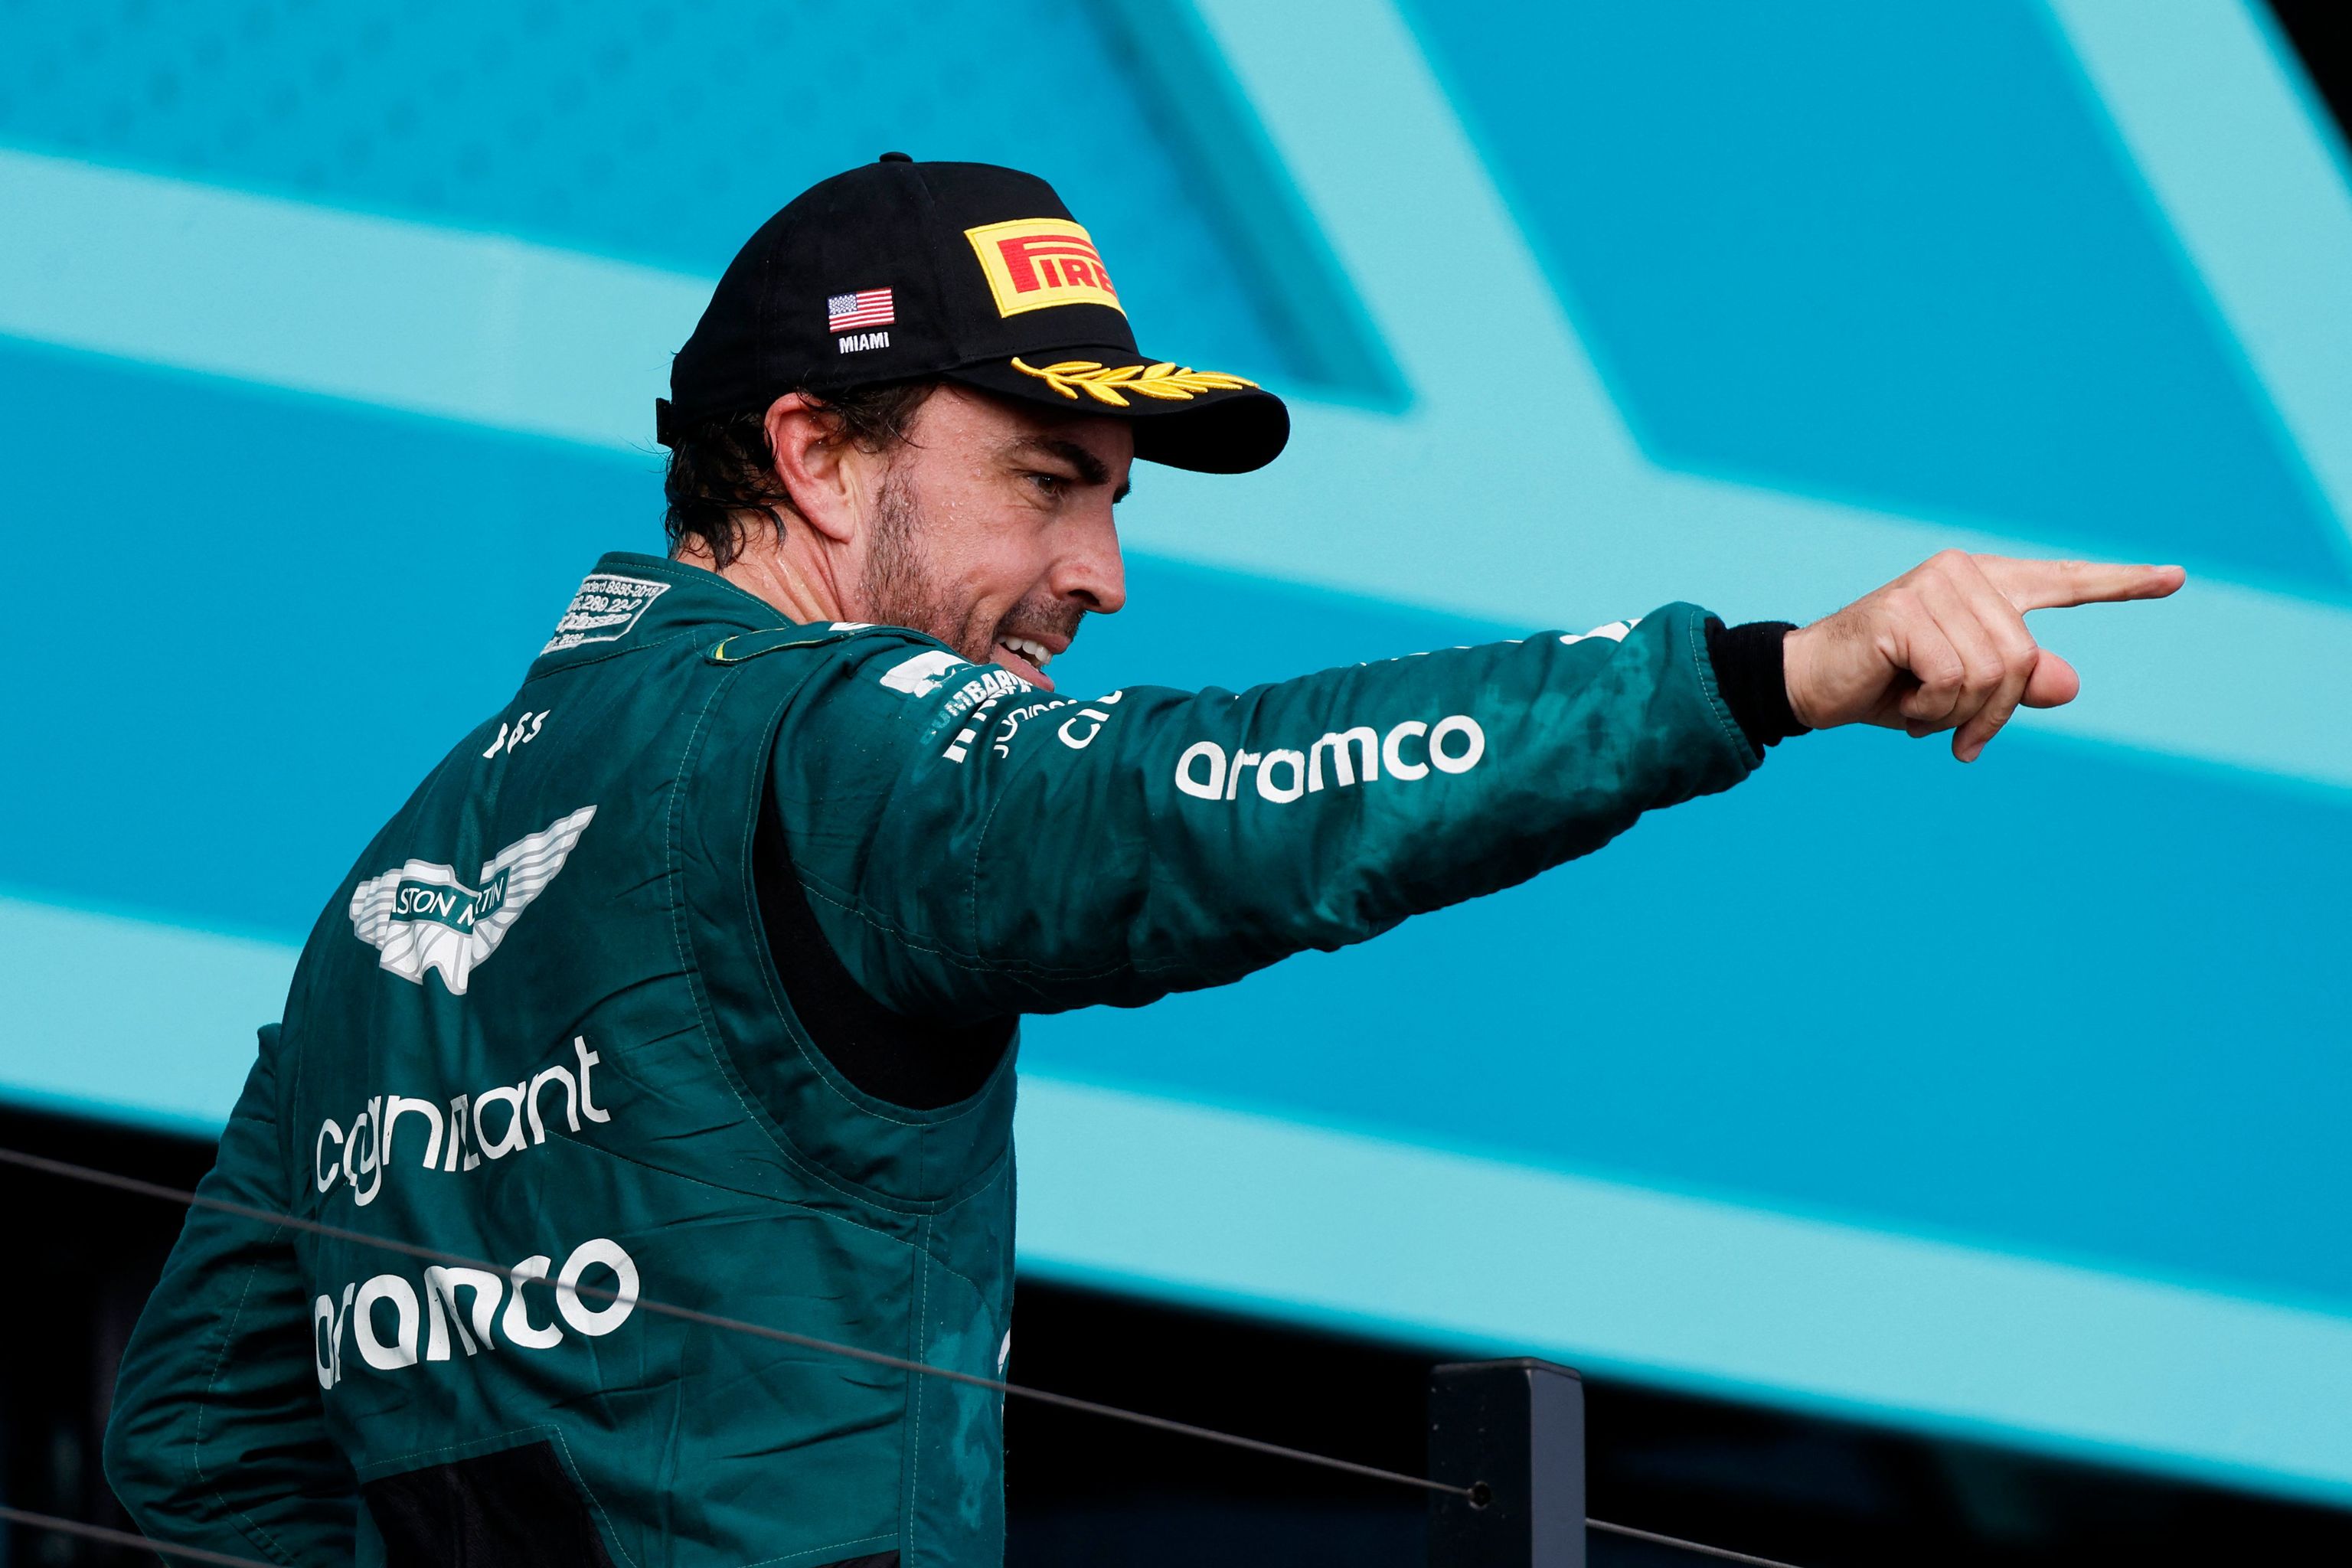 F1 Fernando Alonso, una carrera "mirando la tele" y la promesa de una